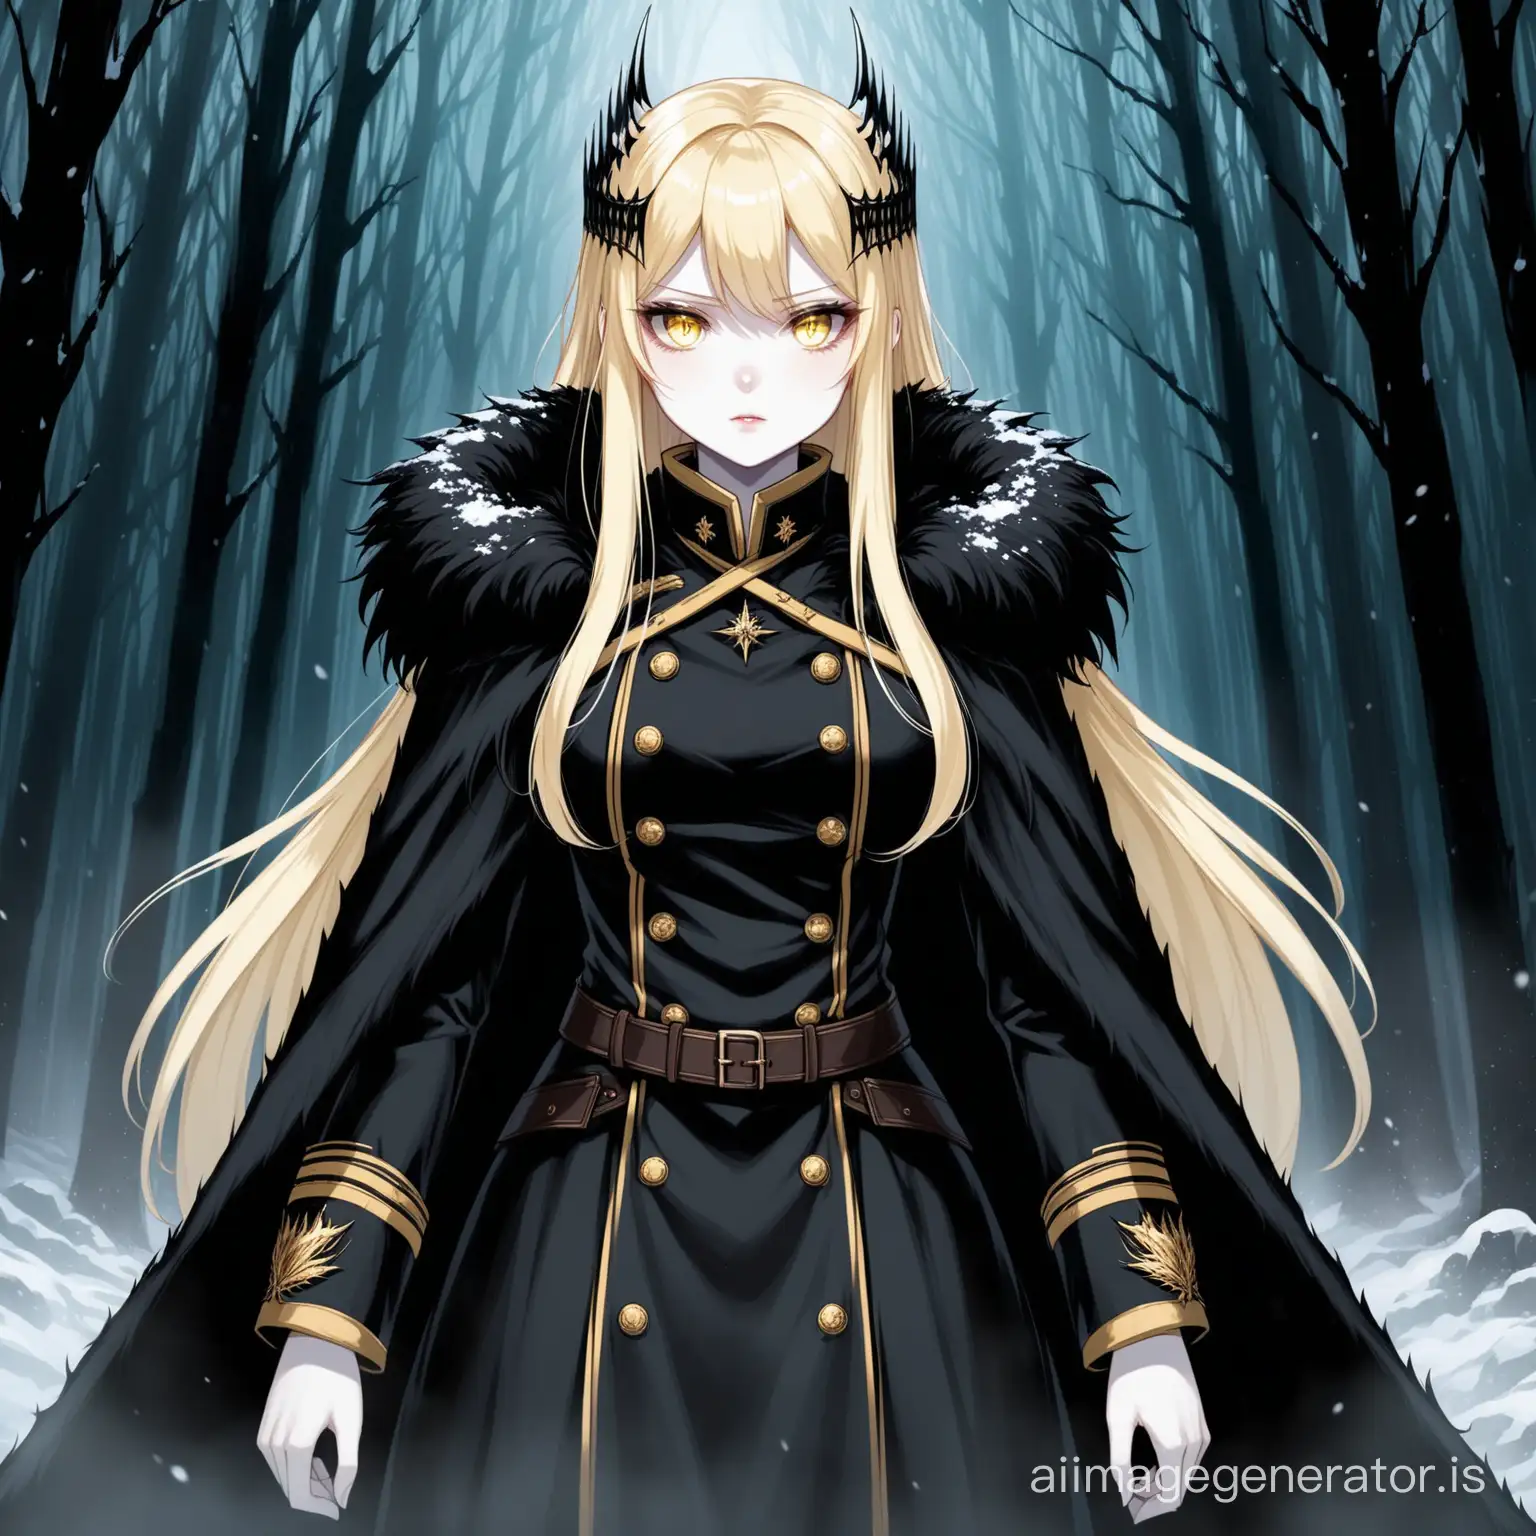 Mystical-Shadow-Princess-in-Midnight-Black-Military-Uniform-and-Fur-Cloak